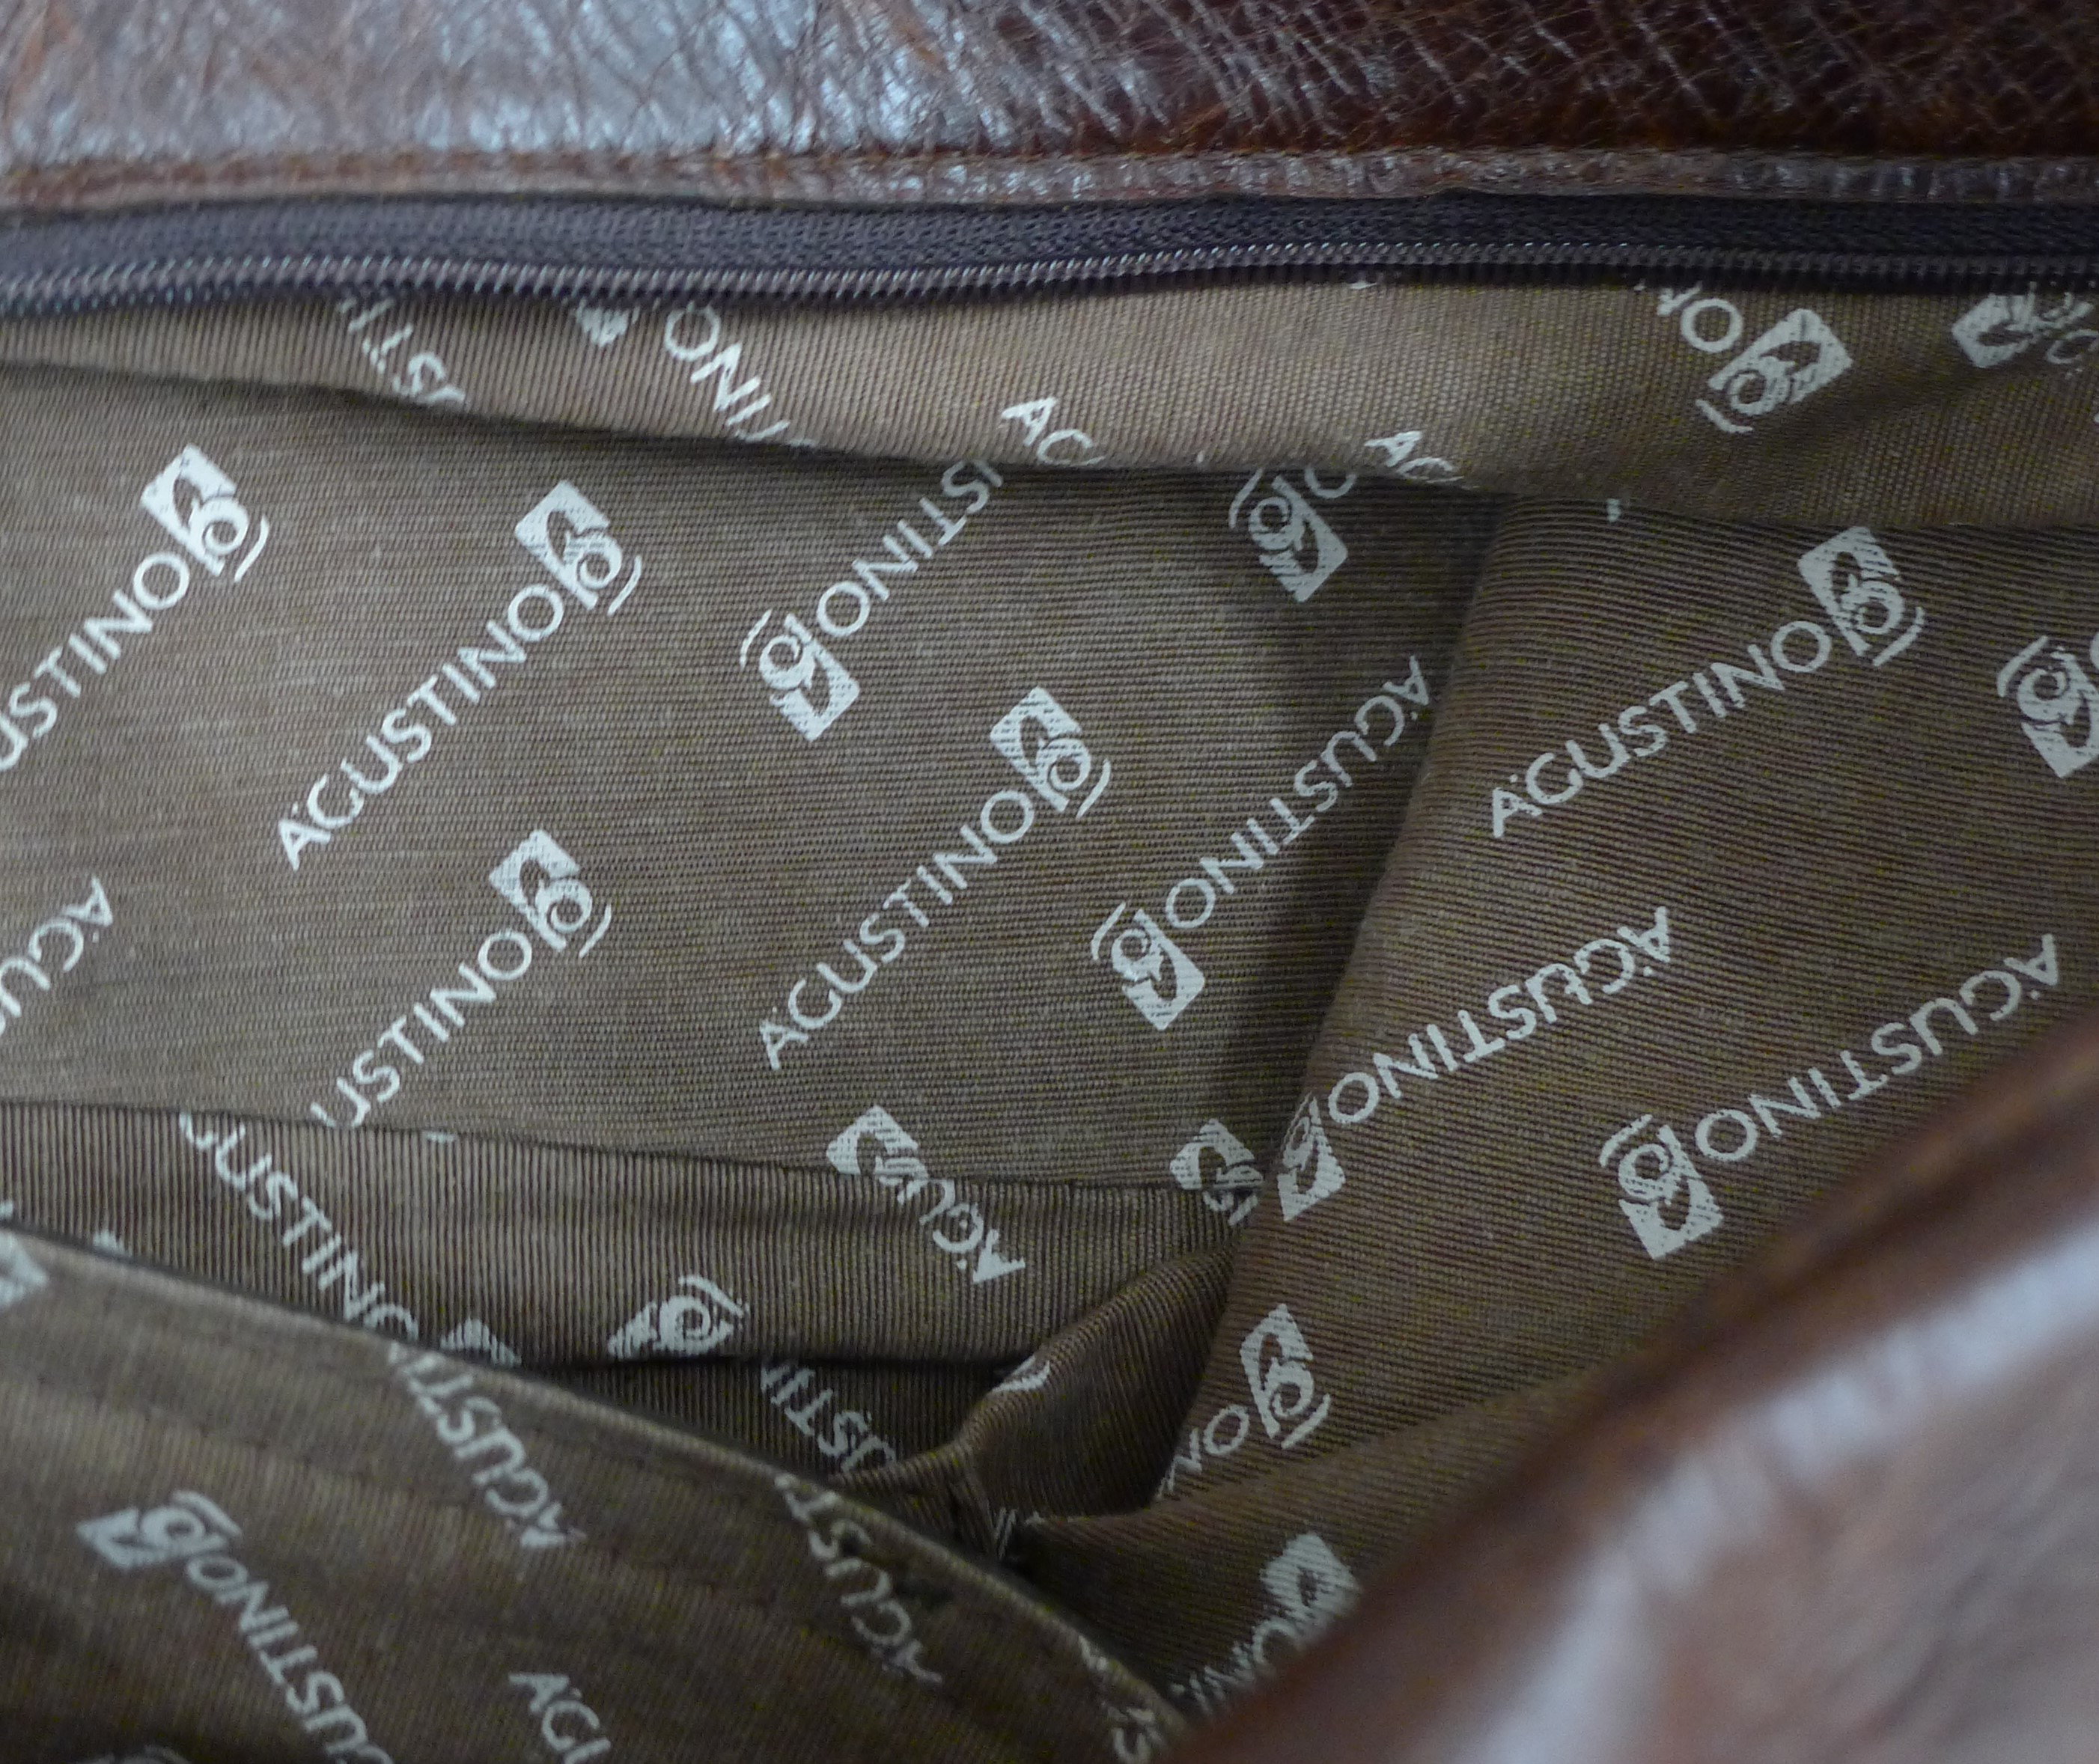 A vintage leather bag. 53 cms long. - Image 2 of 2